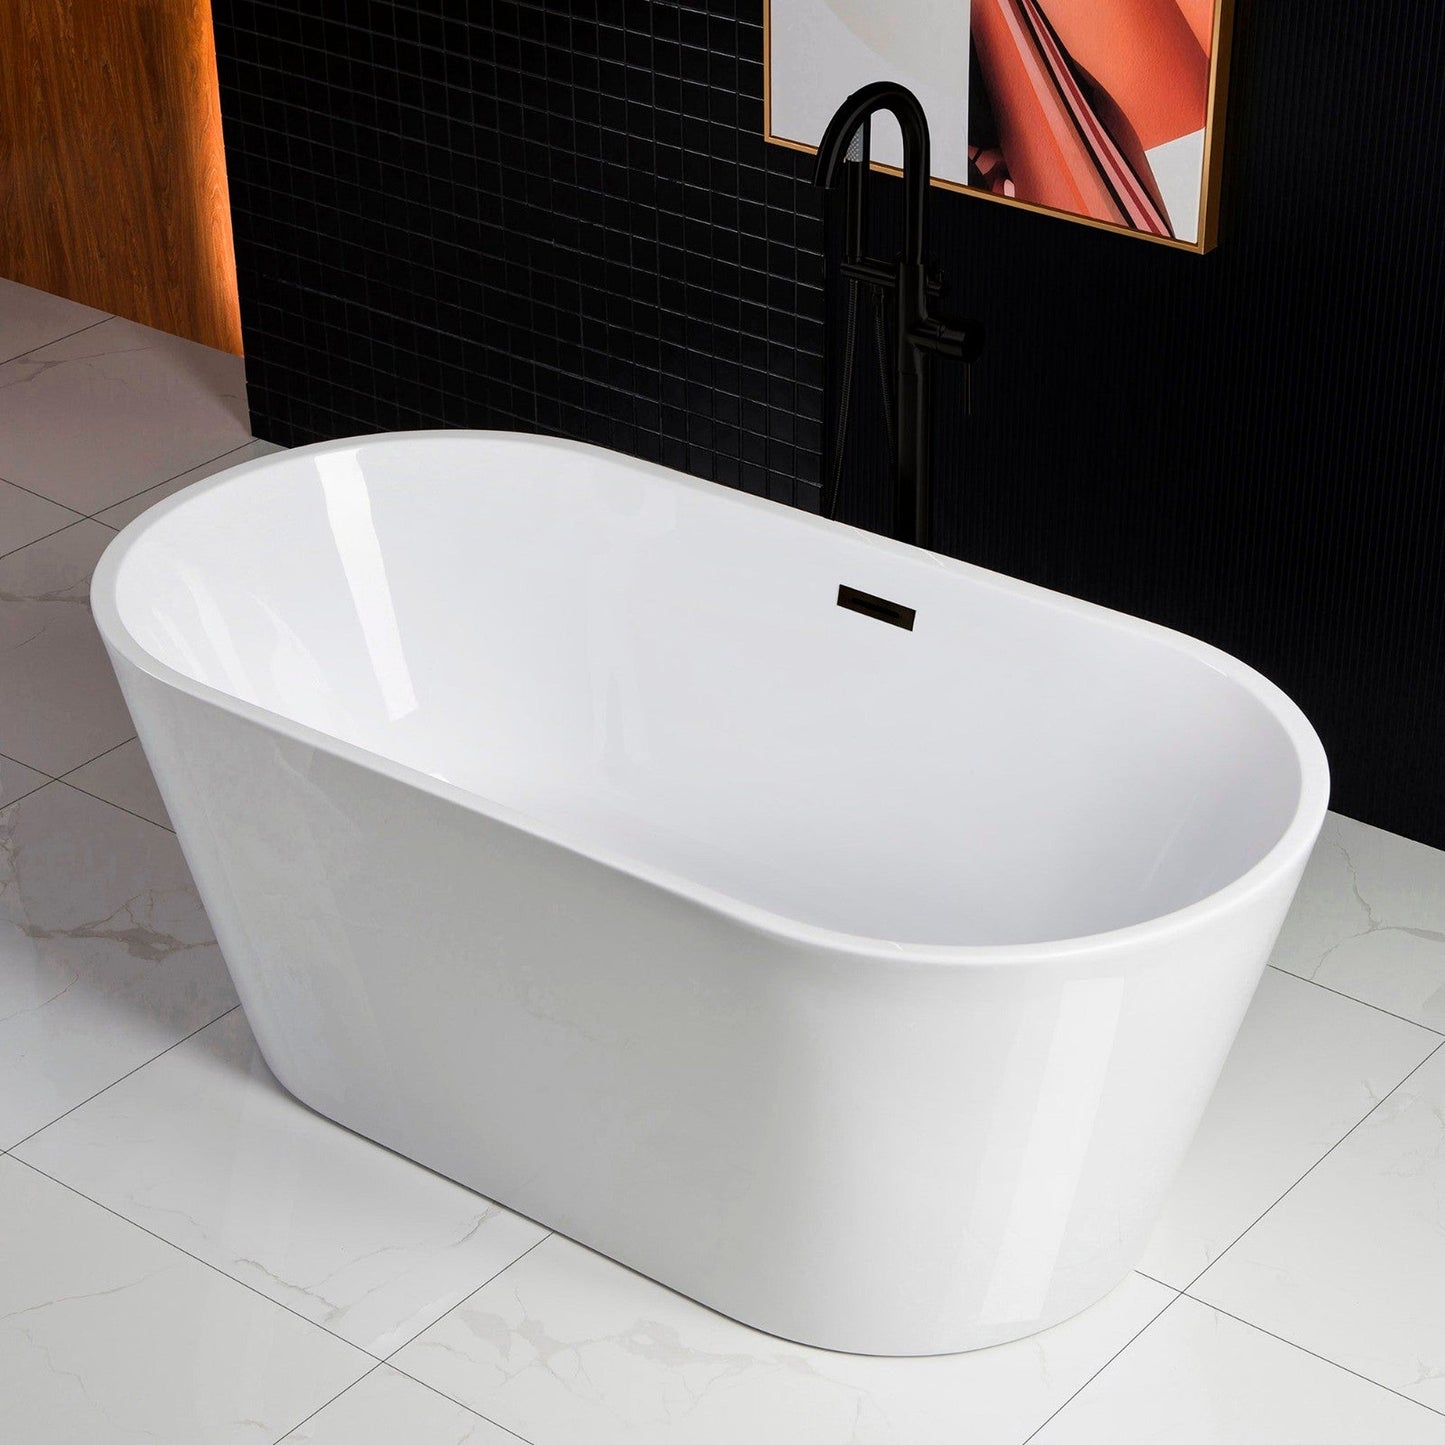 WoodBridge B0014 59" White Acrylic Freestanding Soaking Bathtub With Matte Black Drain, Overflow, F0025MBSQ Tub Filler and Caddy Tray